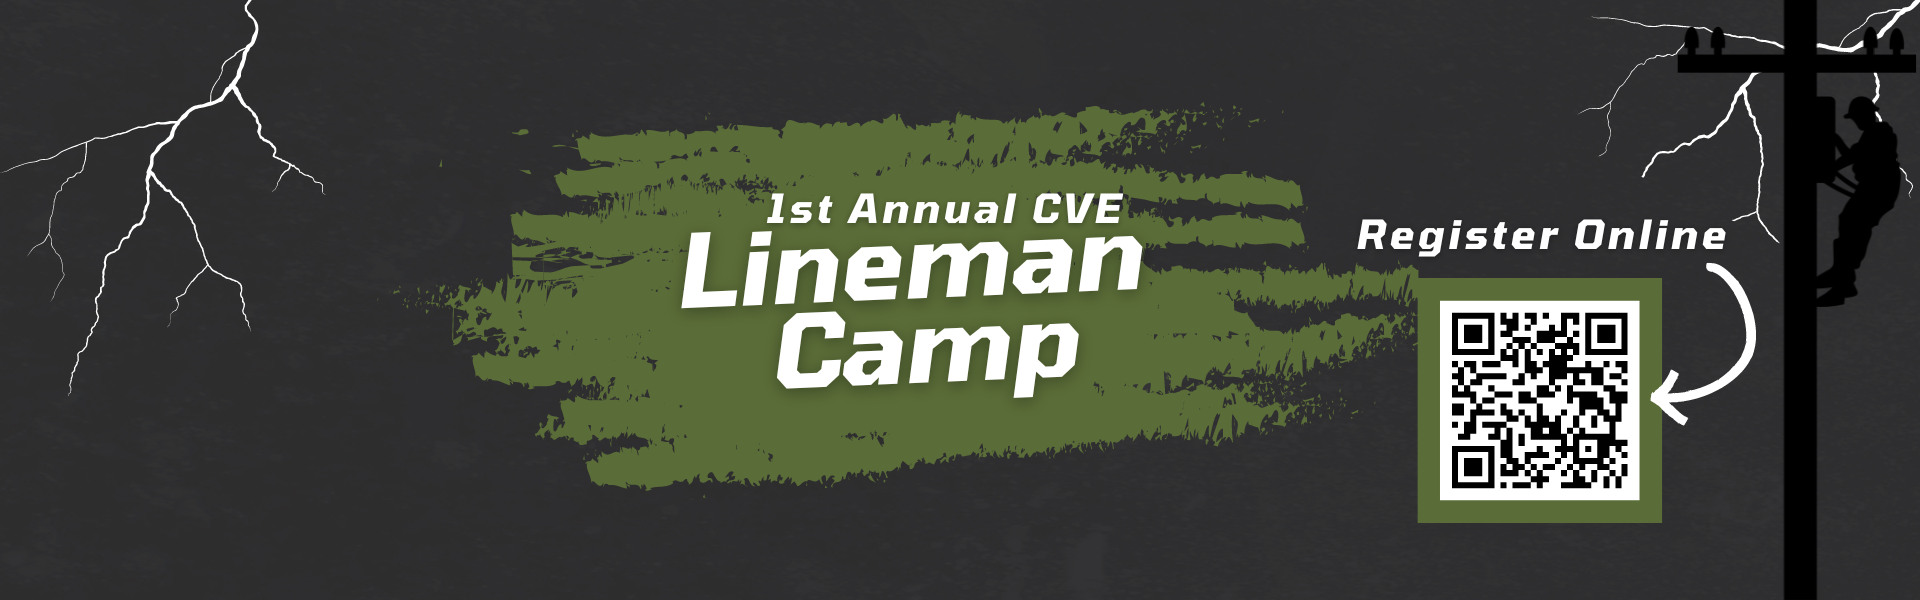 Lineman Camp